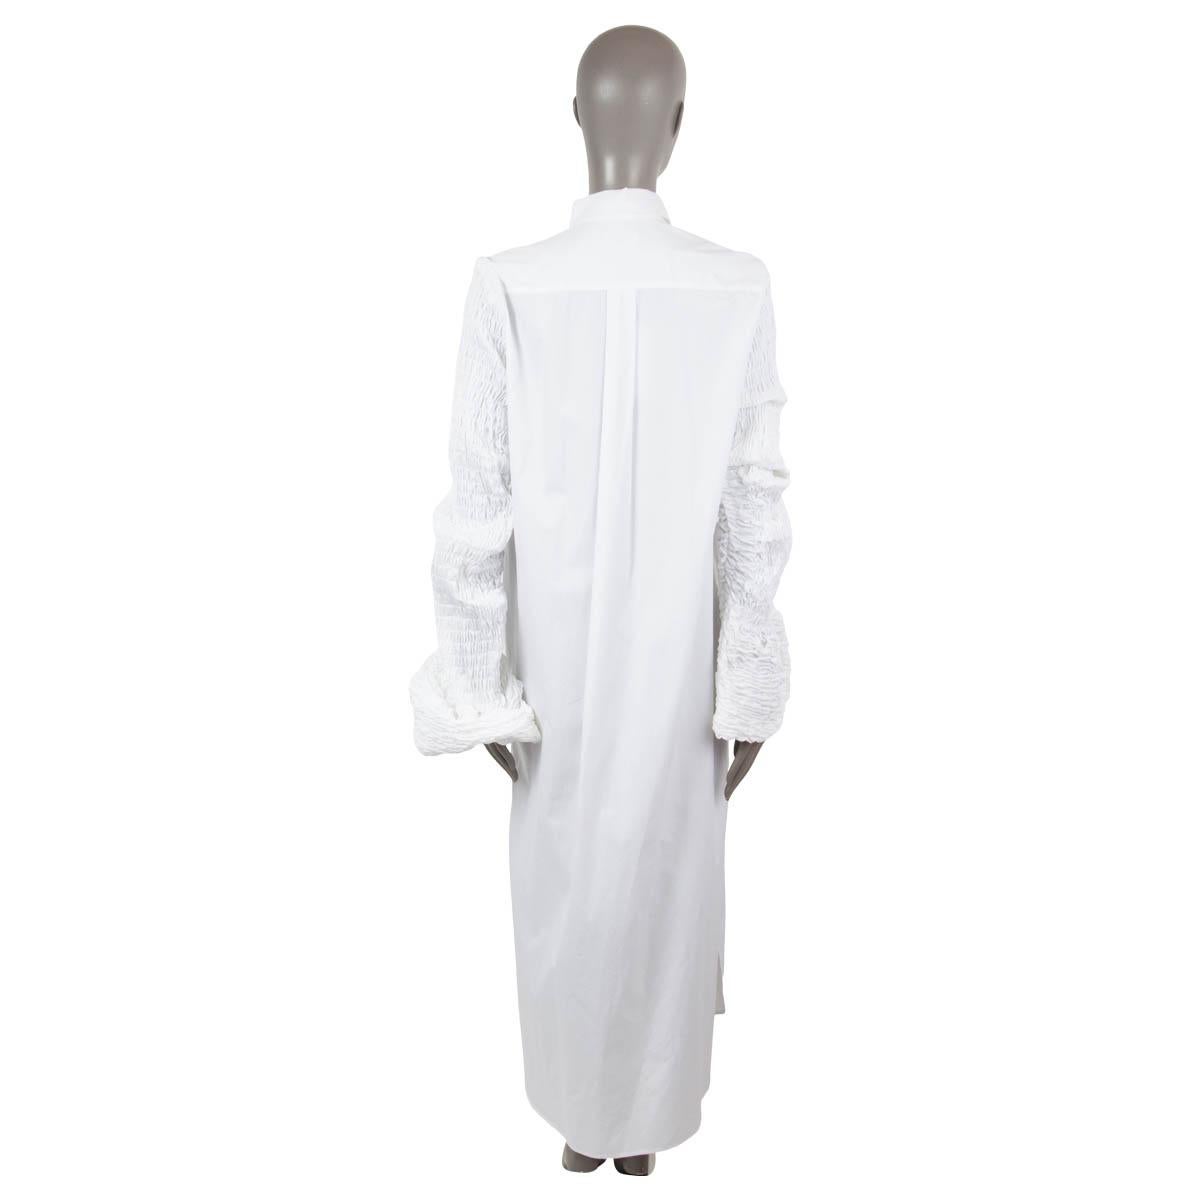 dries van noten white dress